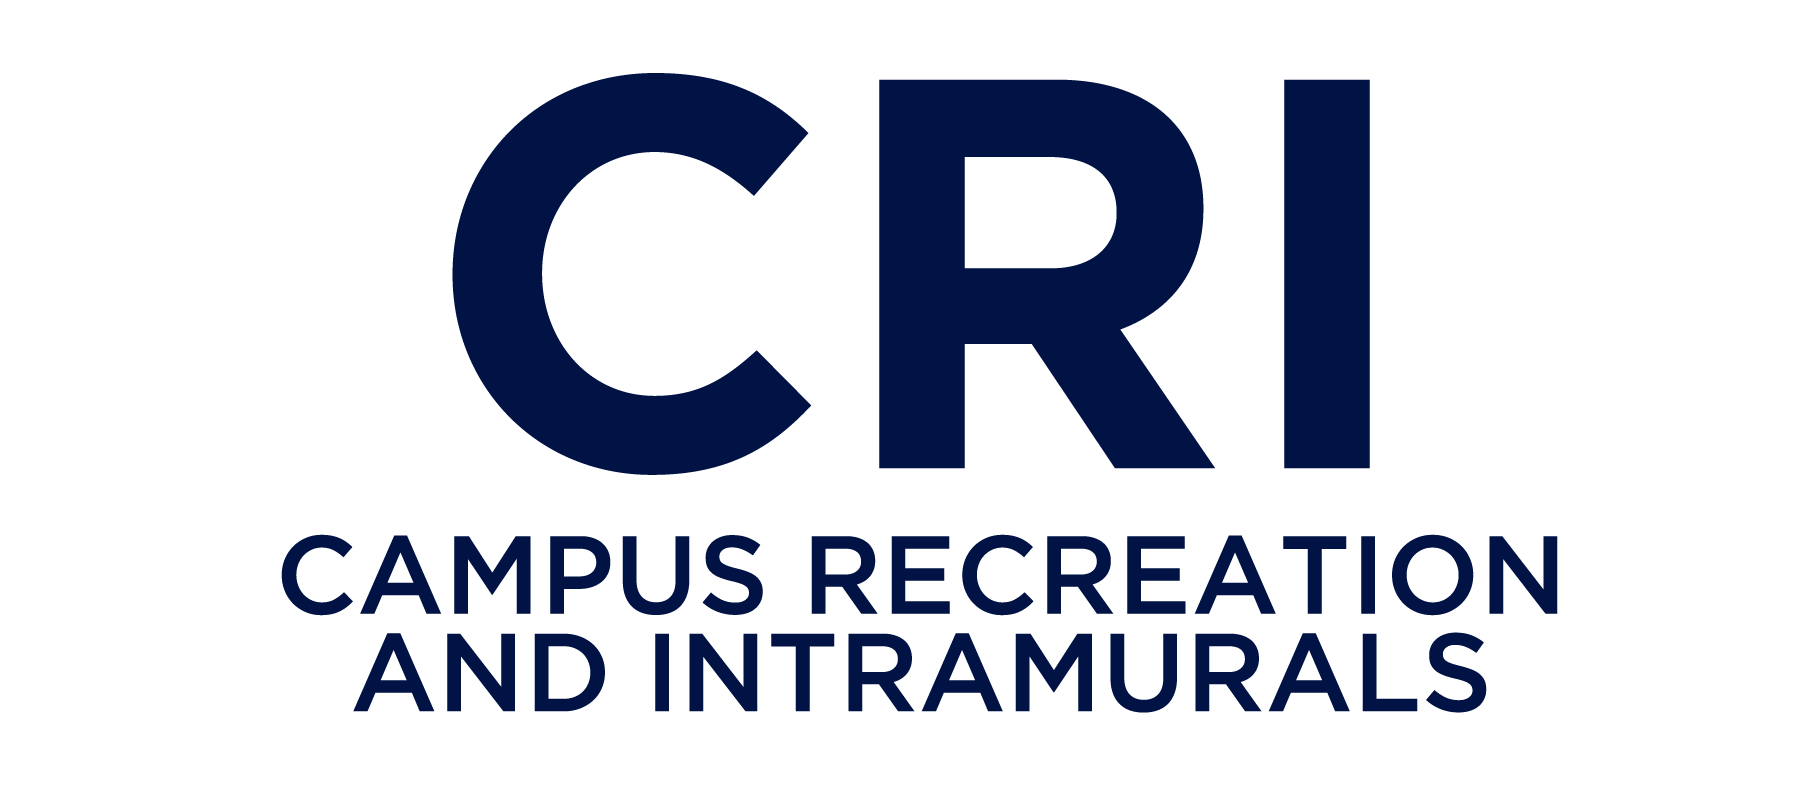 Campus Recreation and Intramurals Information!